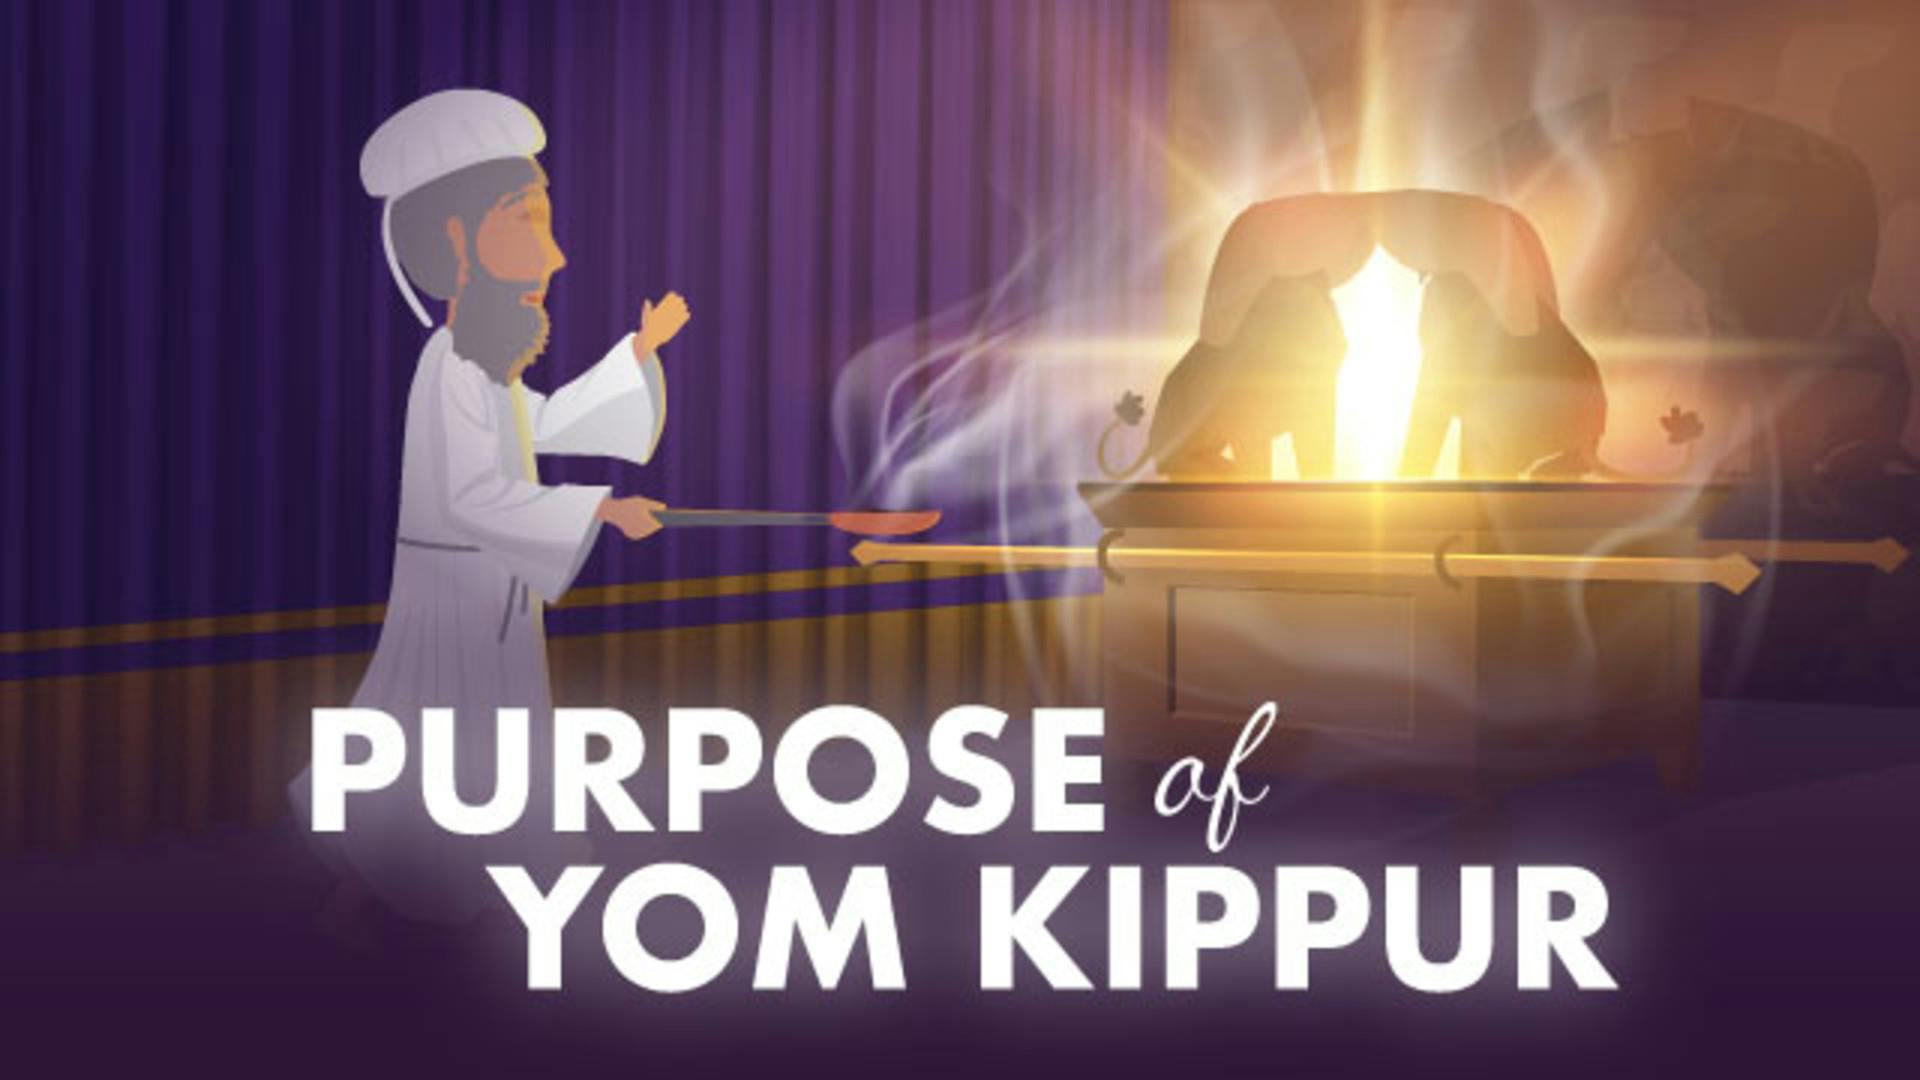 Yom Kippur forgiveness meaning purpose